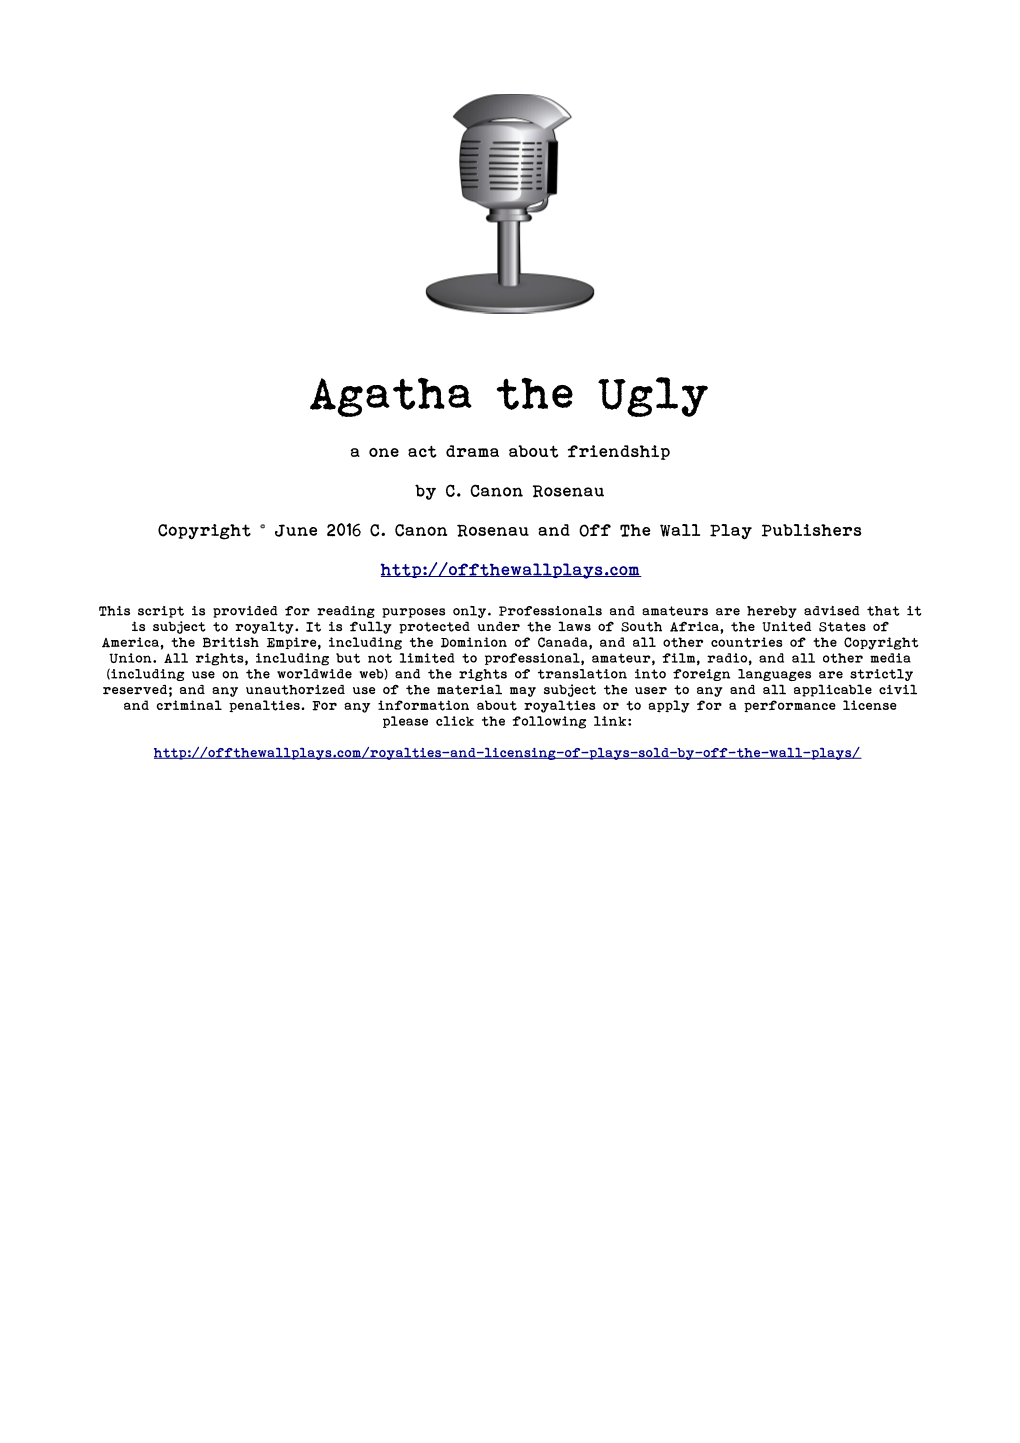 Agatha the Ugly